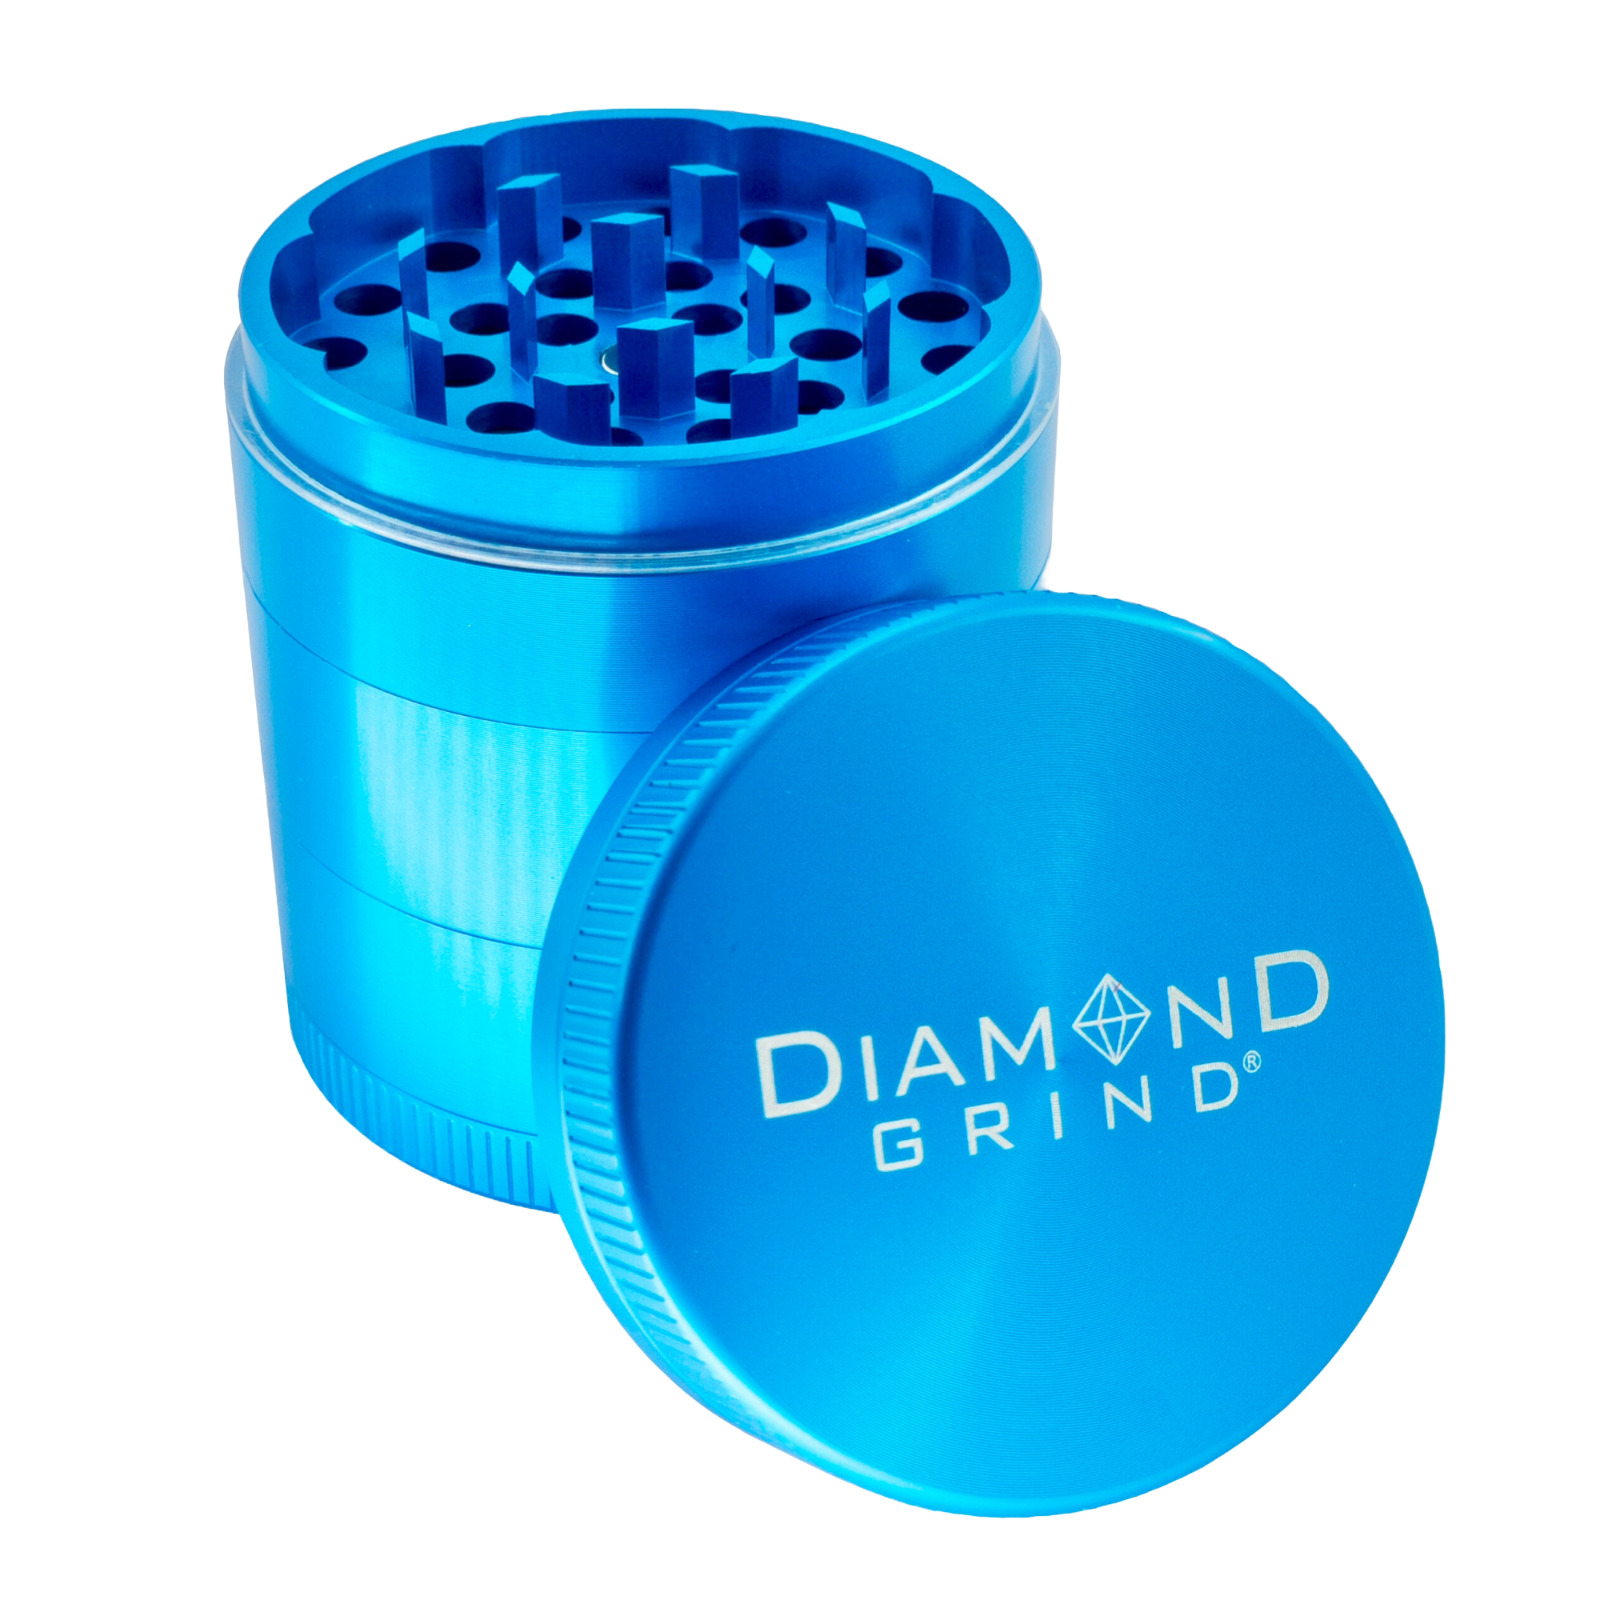 Diamond Grind Spice grinder 30mm 1.25